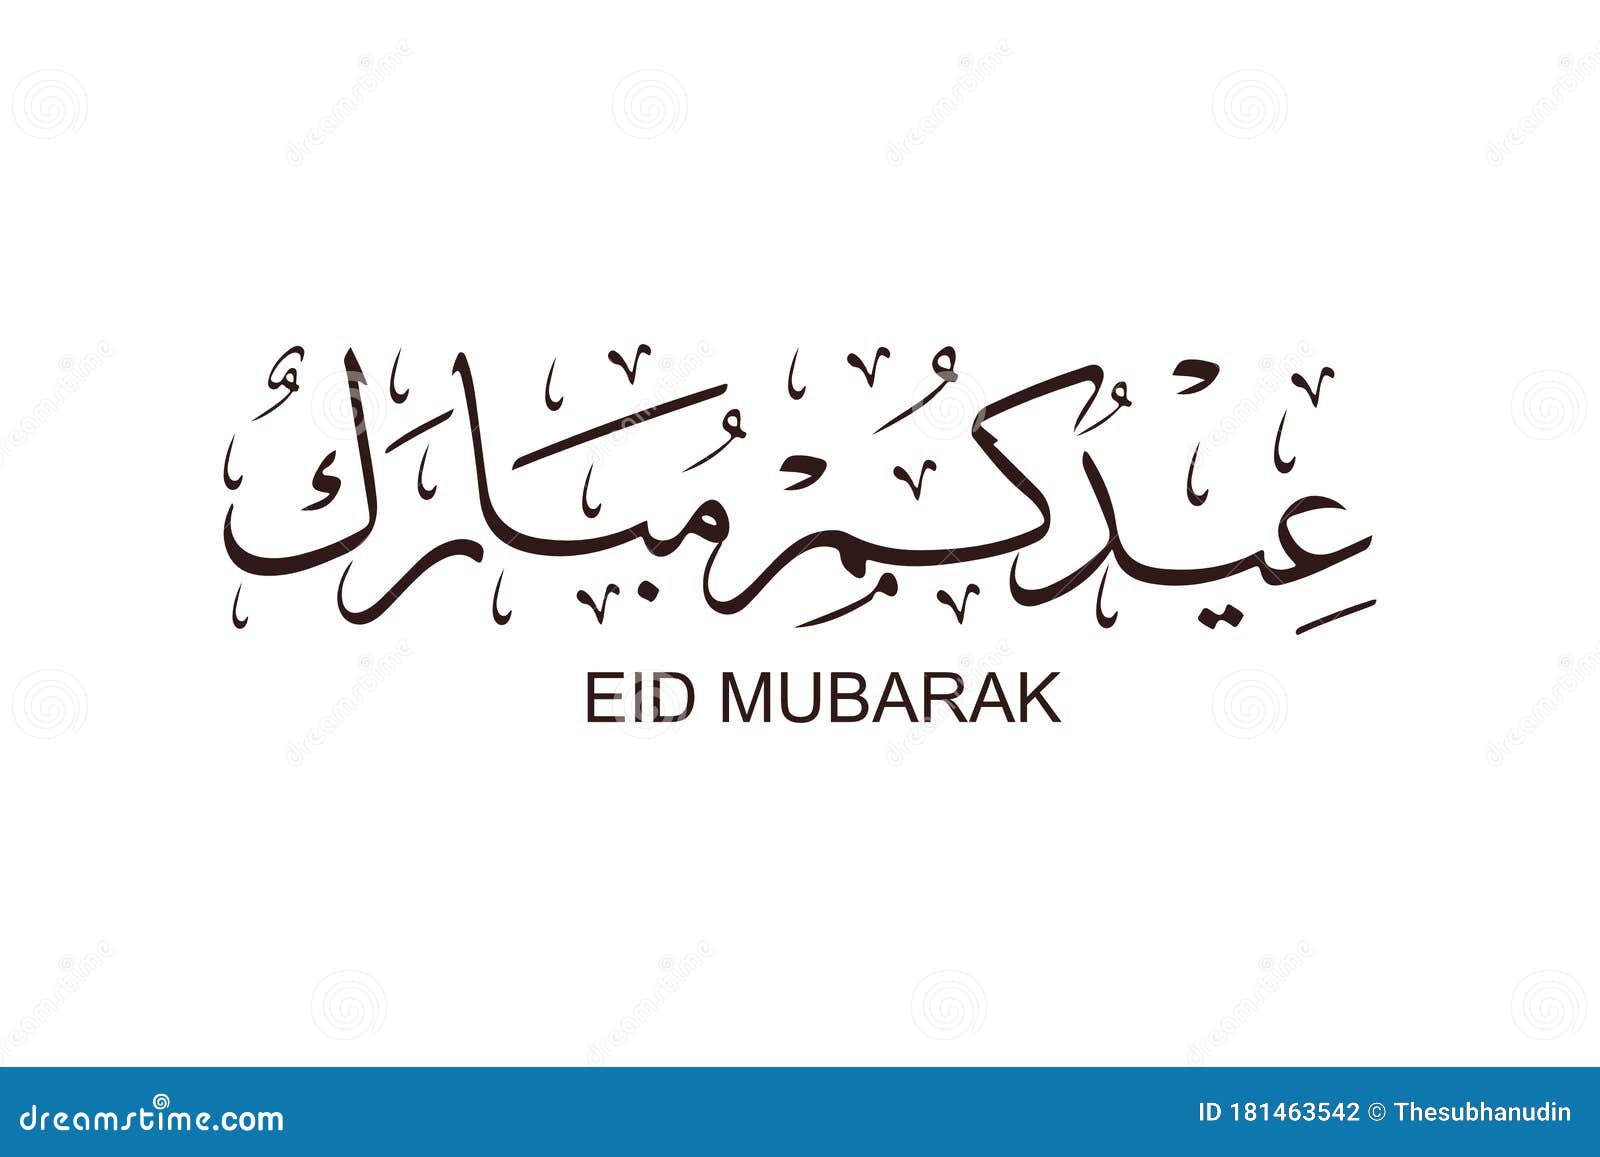 Special Eid Mubarak Greeting Card with Creative Arabic Calligraphy ...